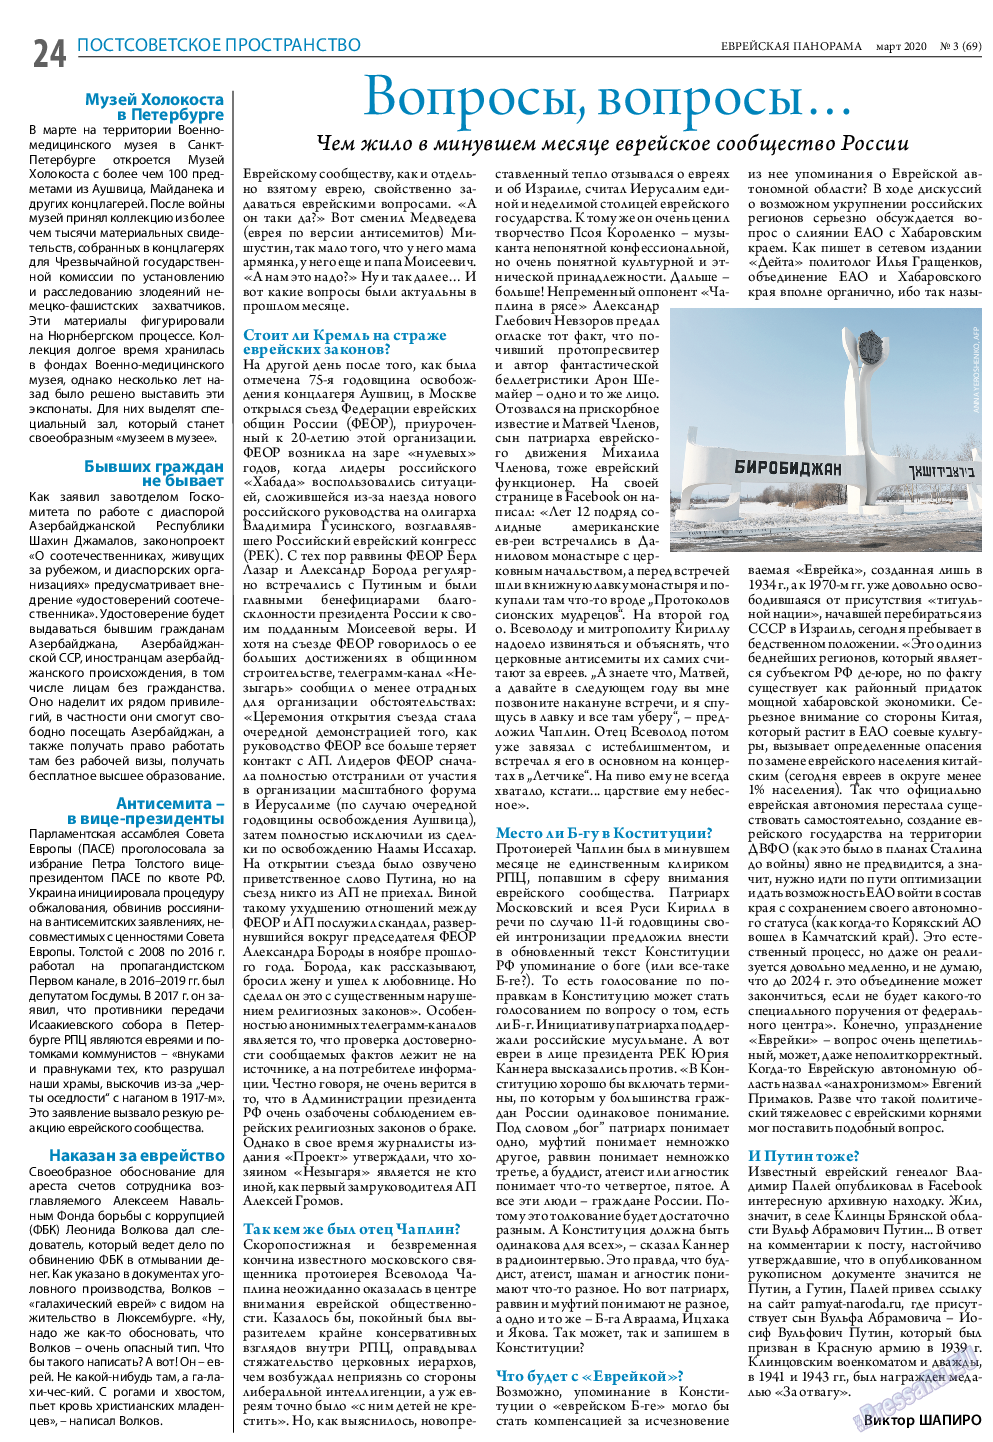 Еврейская панорама, газета. 2020 №3 стр.24